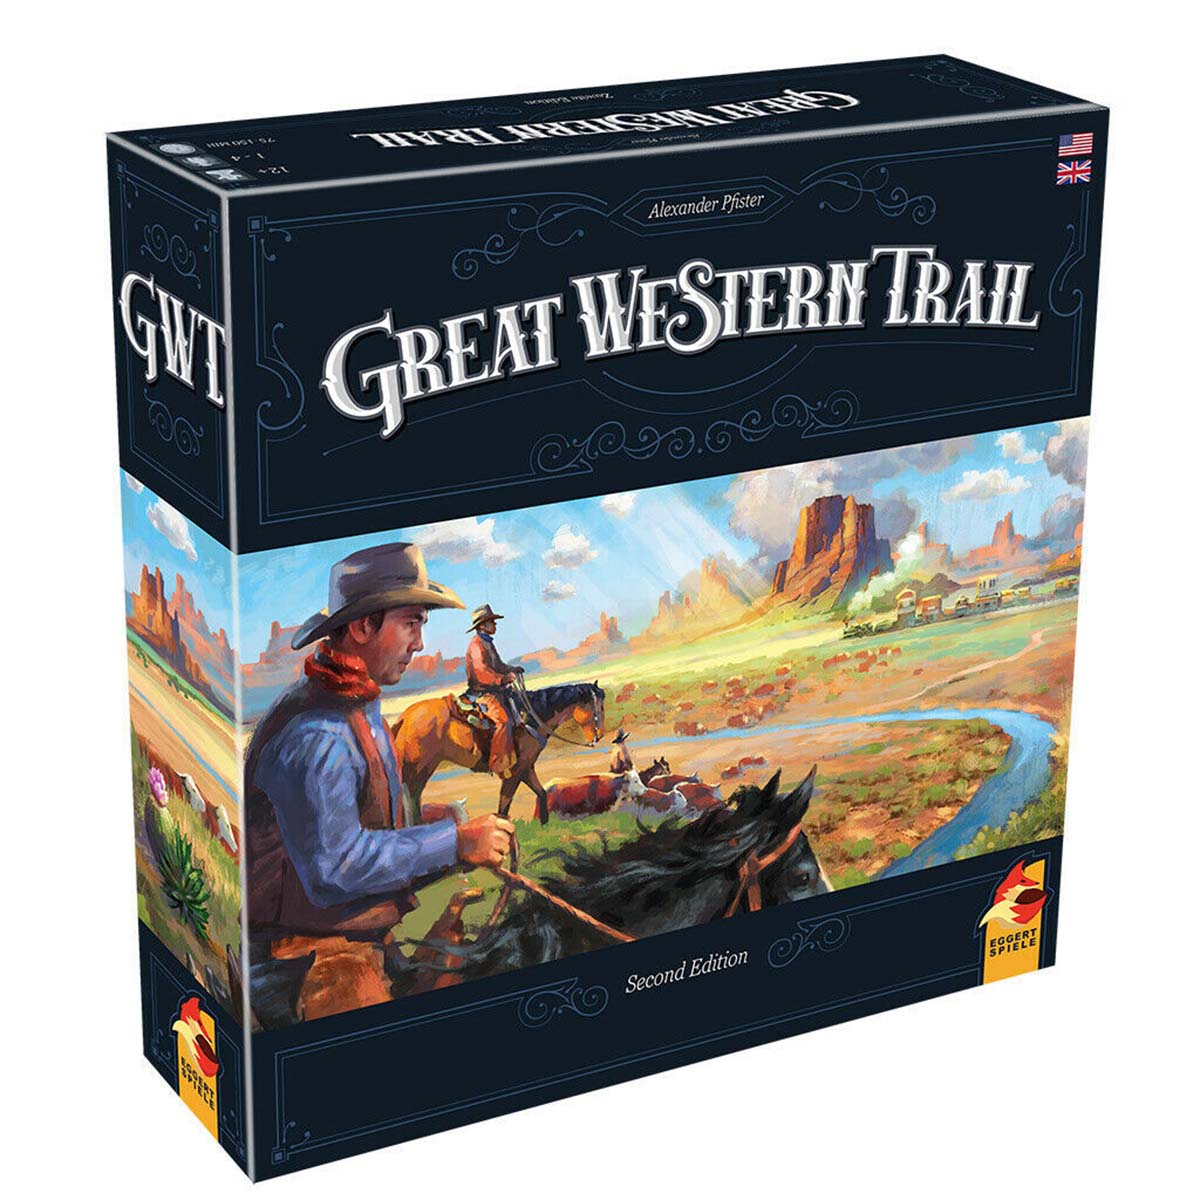 Great Western Trail board game box